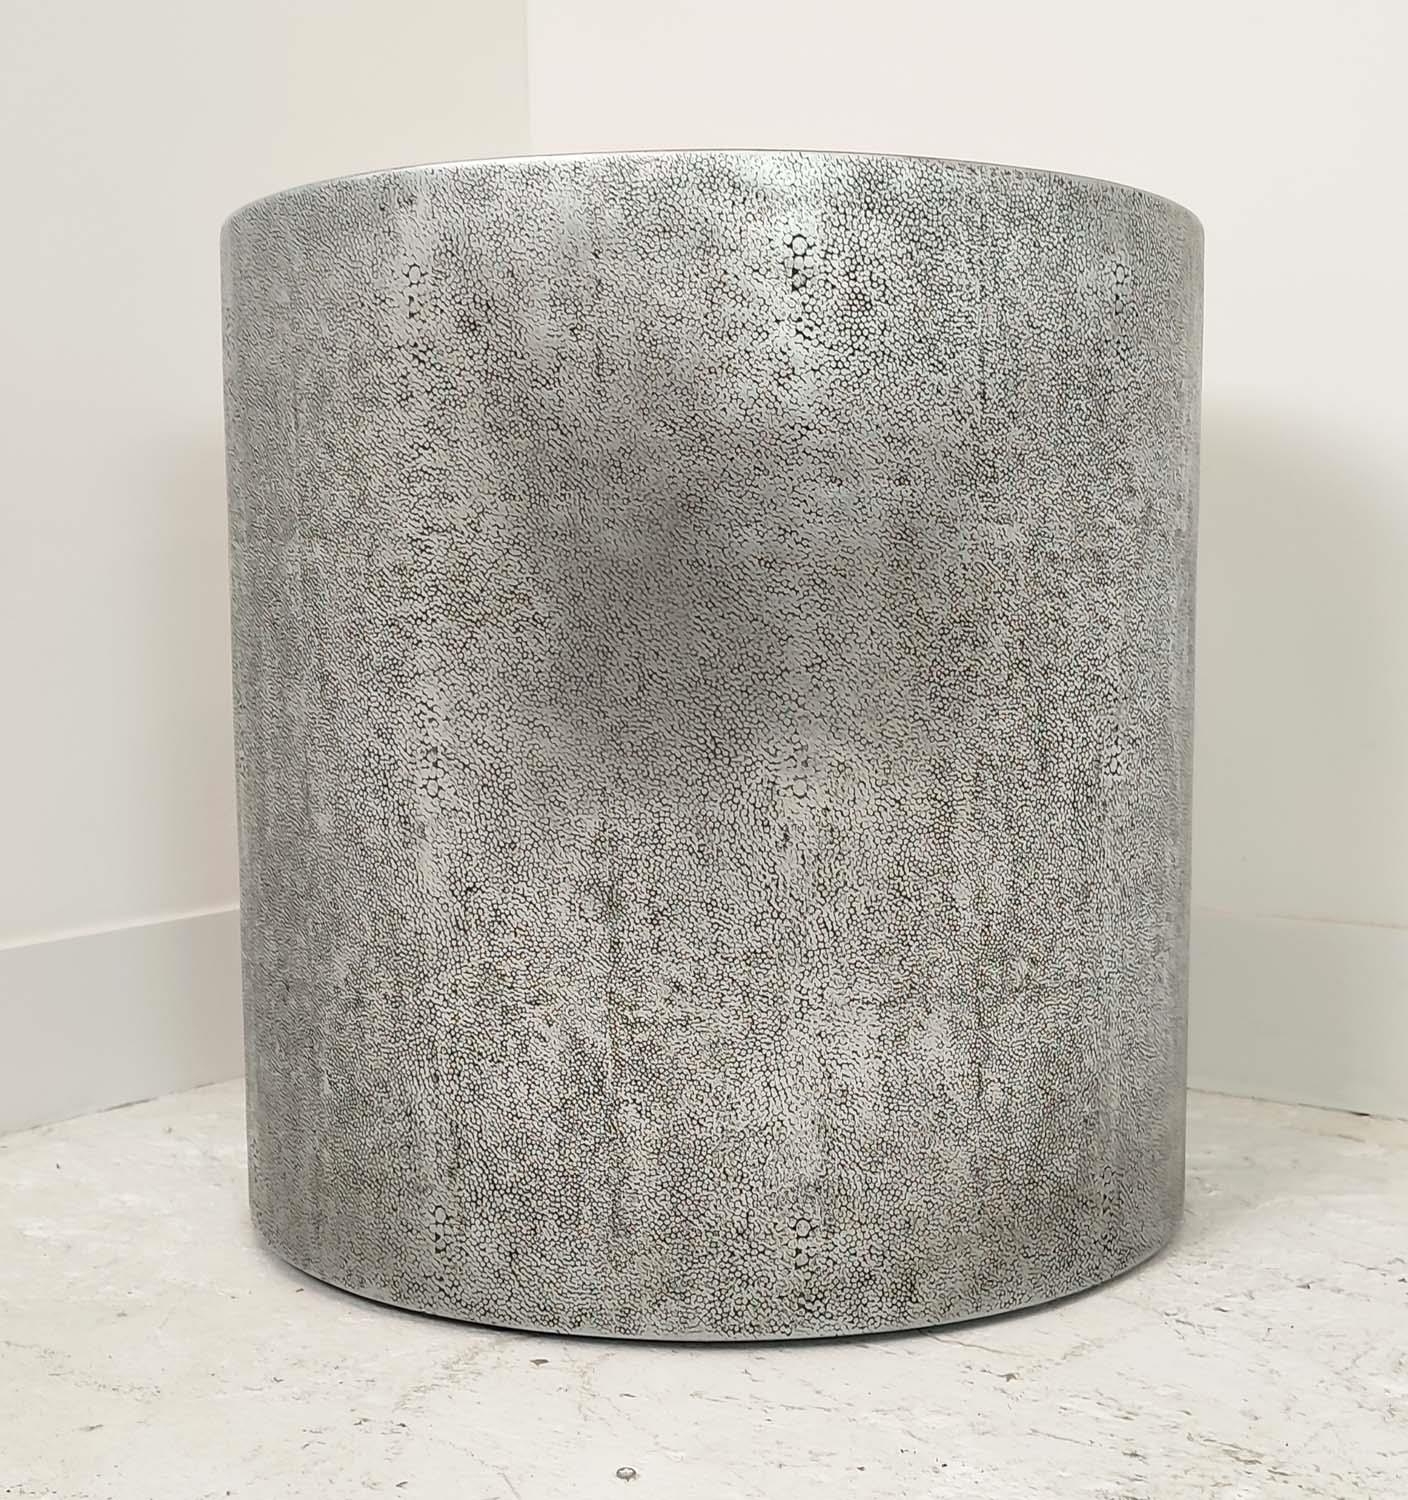 JULIAN CHICHESER 'DELON' SIDE TABLE, 50cm W x 52cm H. - Image 2 of 4